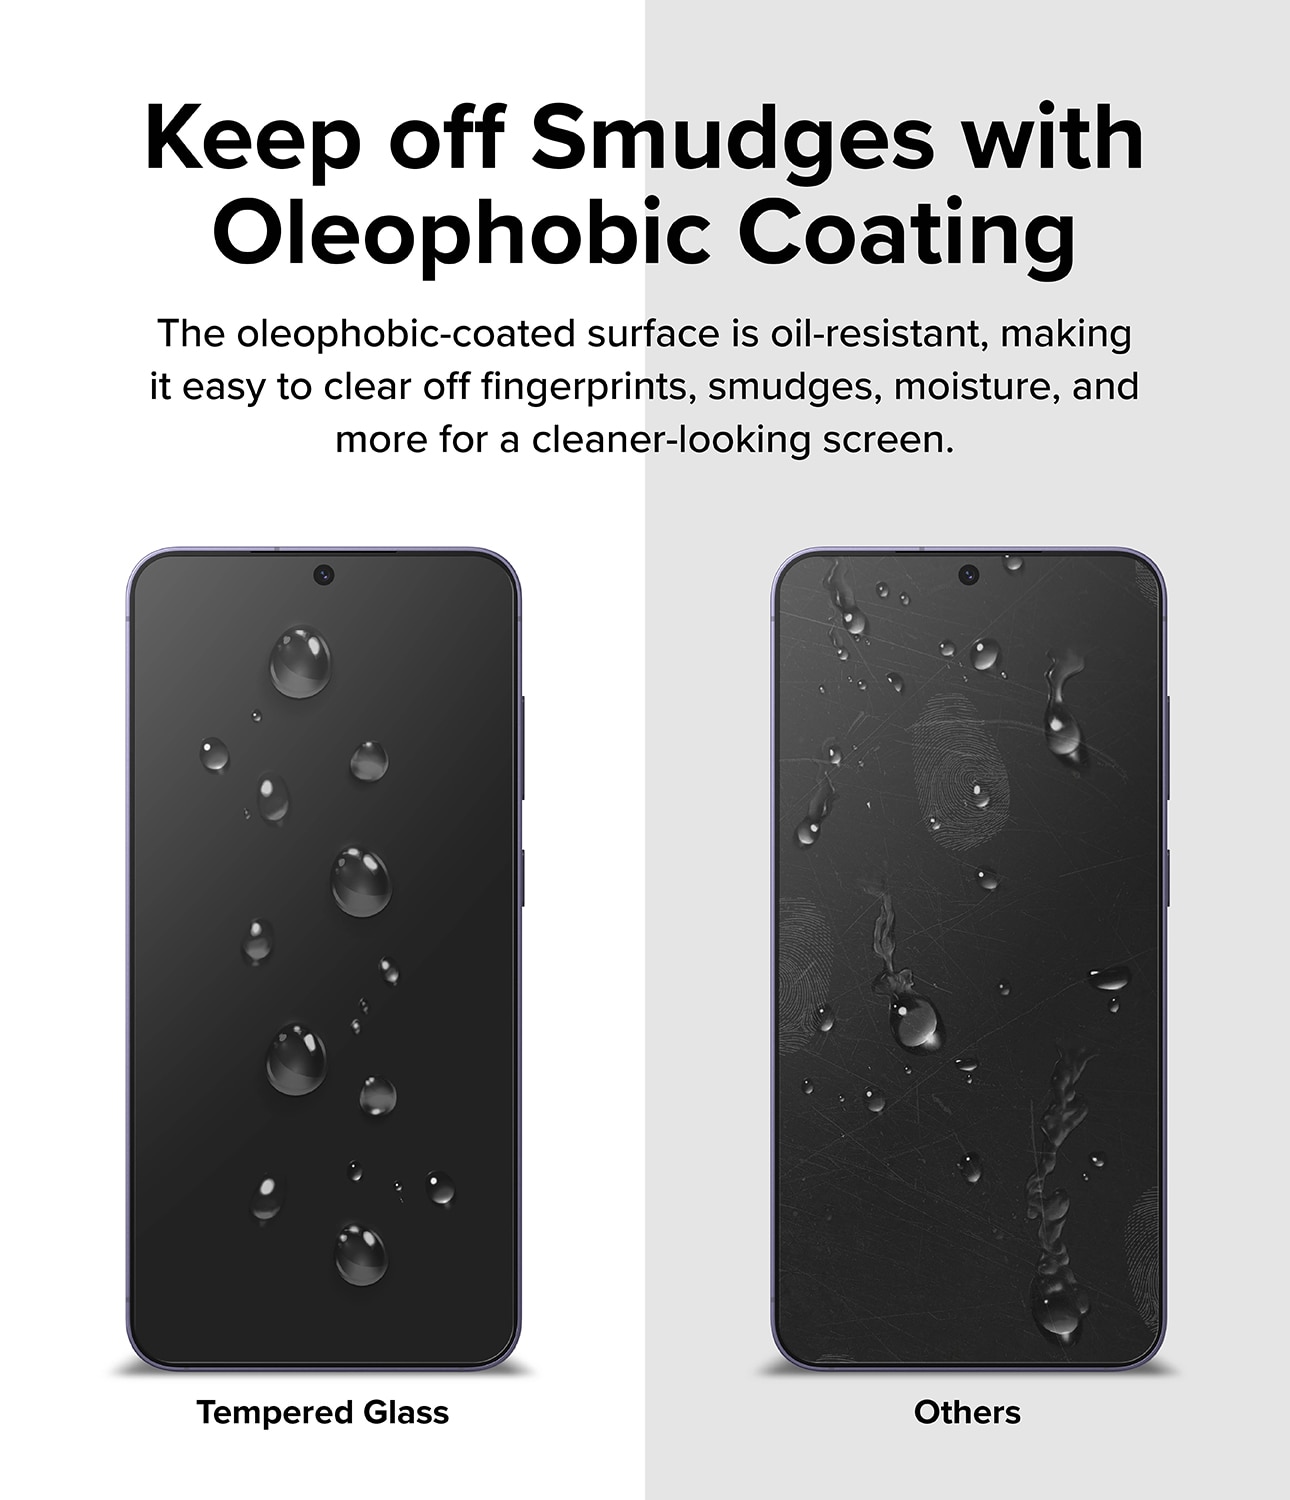 Ringke Easy Slide Glass (2-pack) Samsung Galaxy S24